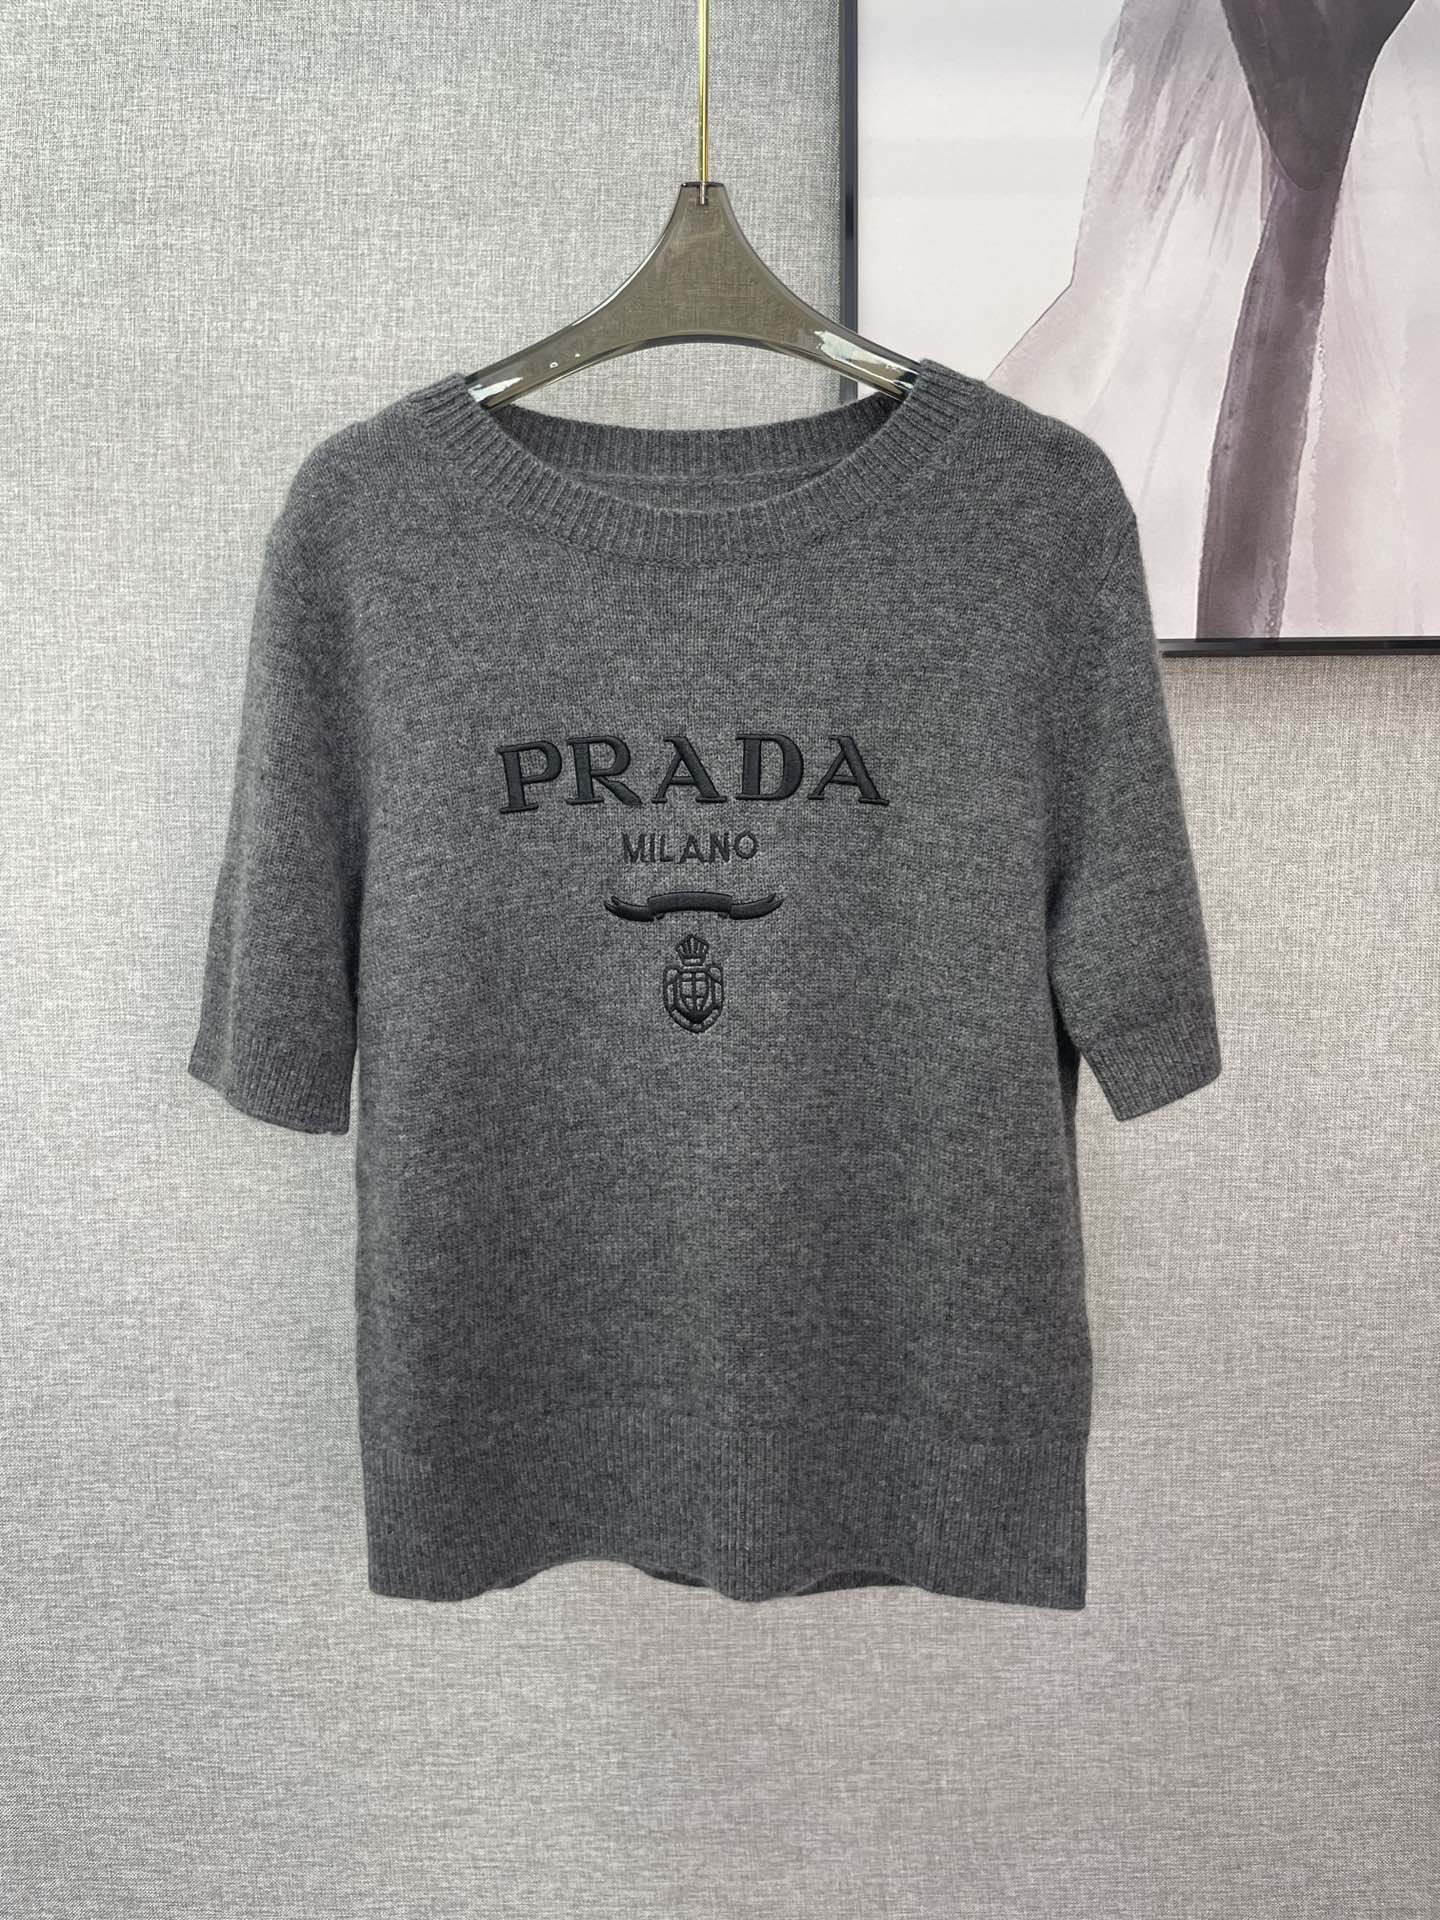 Prada Clothing Sweatshirts T-Shirt Embroidery Cashmere Short Sleeve